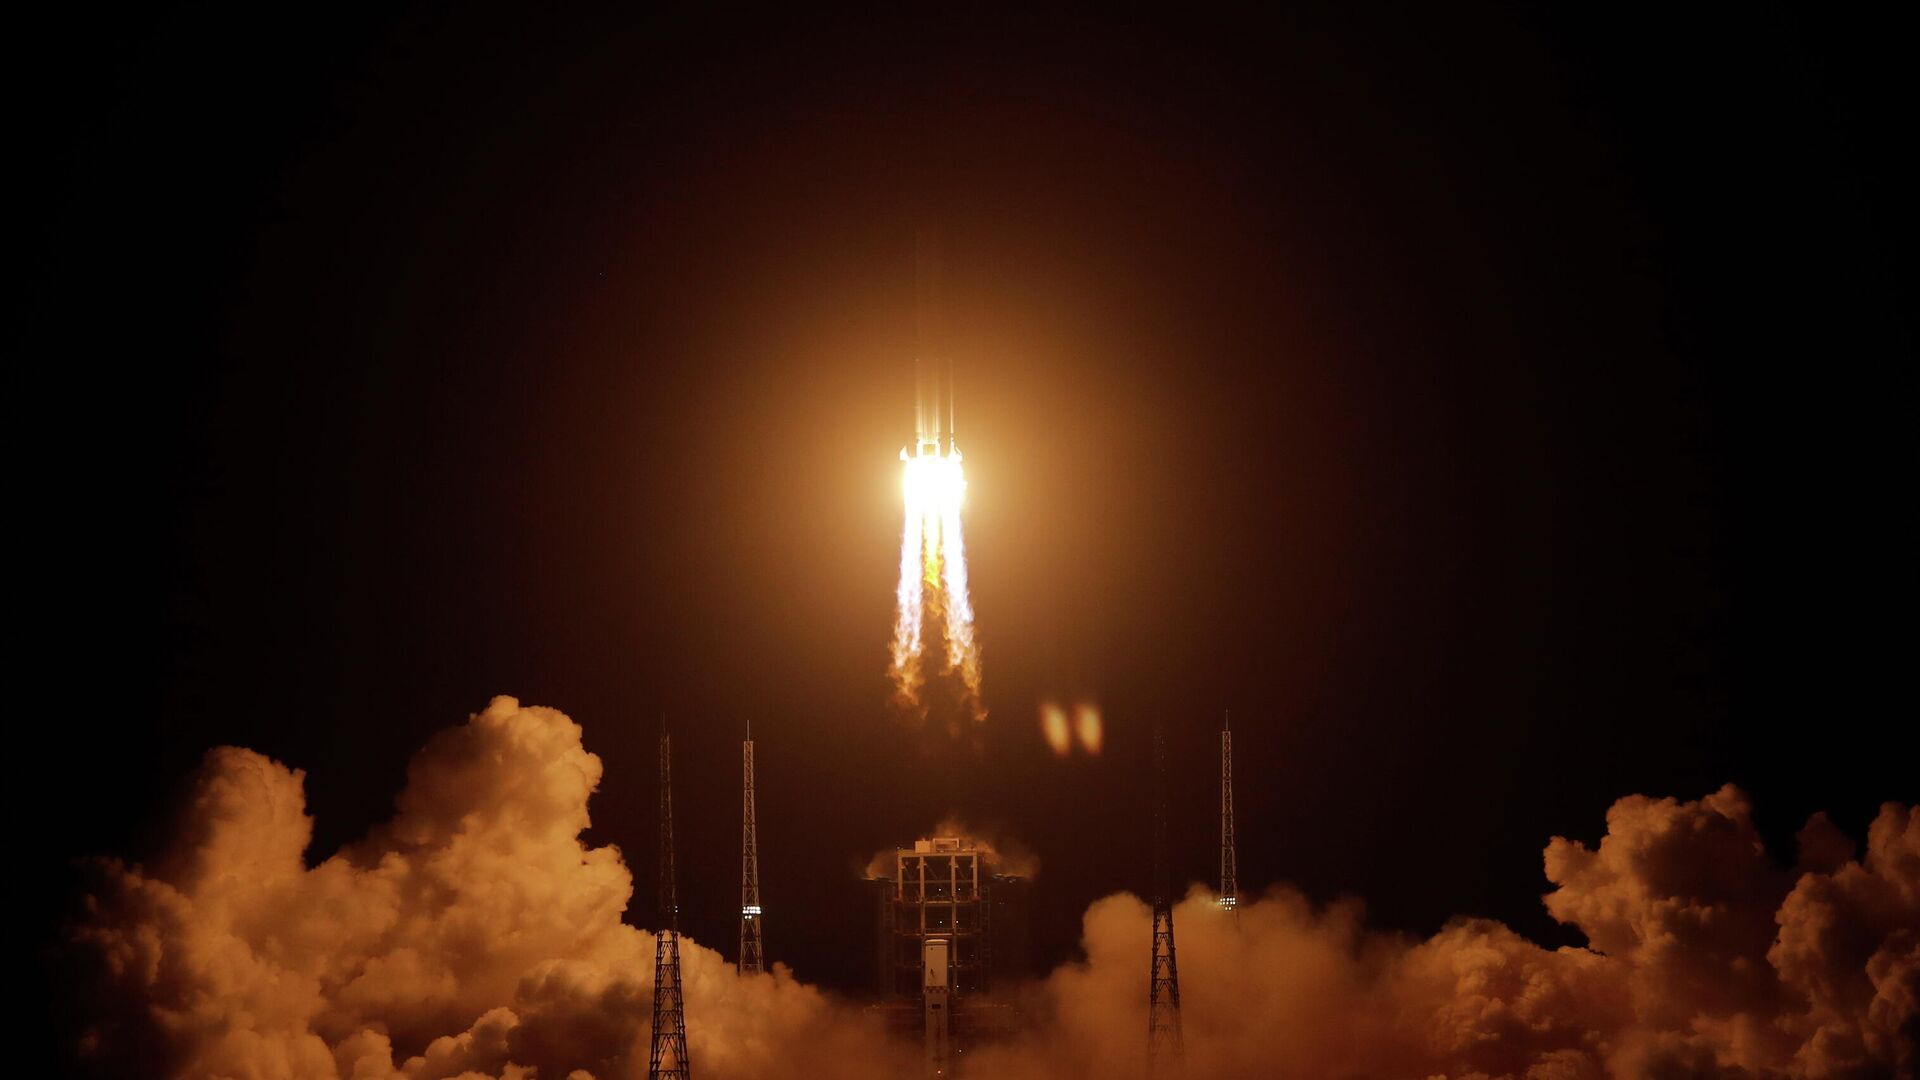 Запуск аппарата Чанъэ-5 при помощи ракеты-носителя Чанчжэн-5 с космодрома Вэньчан в провинции Хайнань - РИА Новости, 1920, 28.11.2020